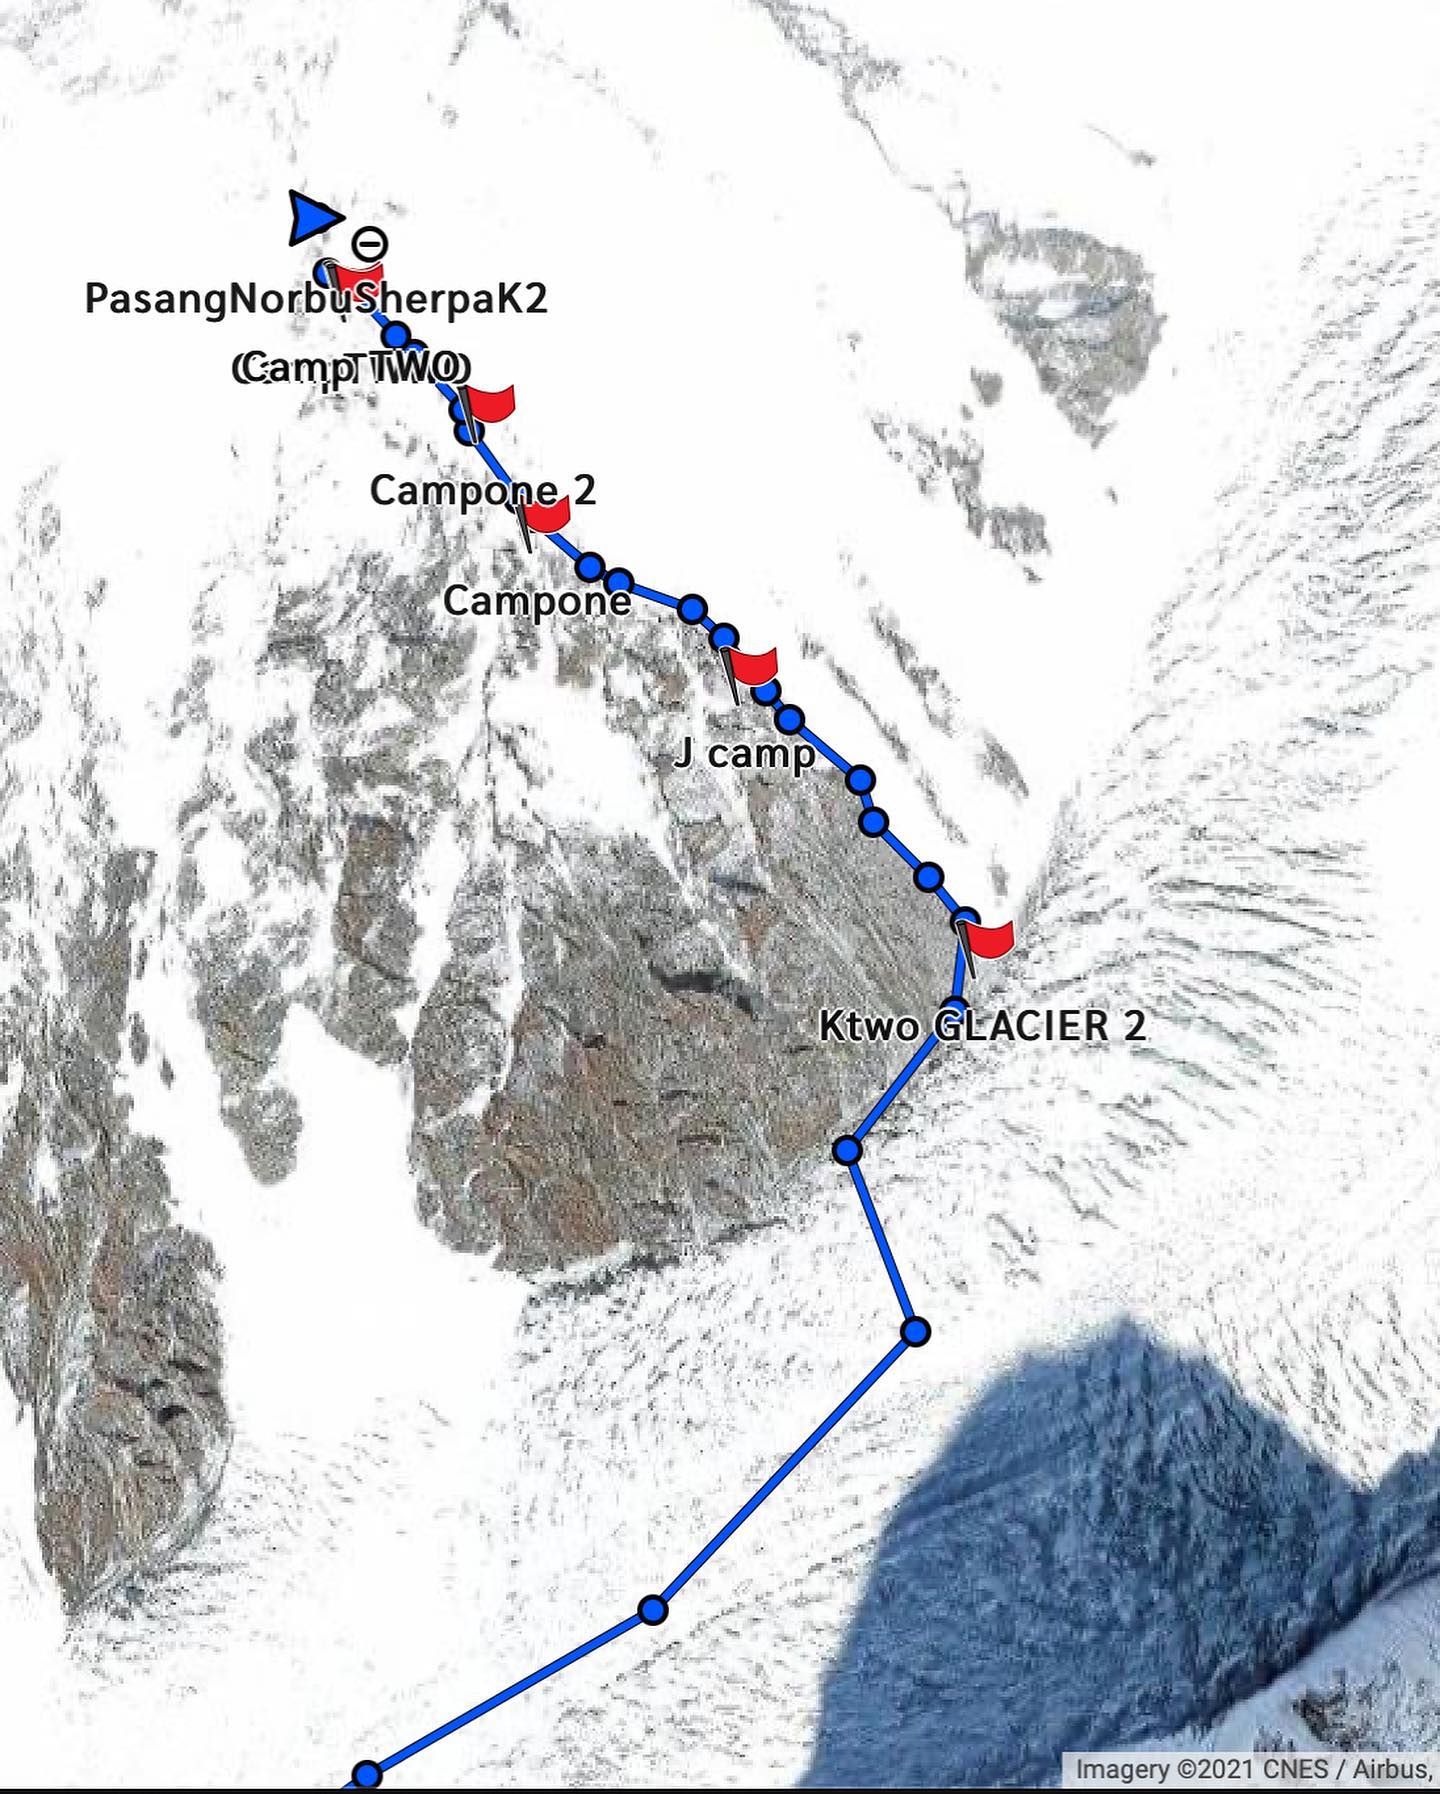 Положение Пасанг Нурбу Шерпа (Pasang Norbu Sherpa) на К2 на 13:25 по пакистанскому времени, 4 февраля 2021